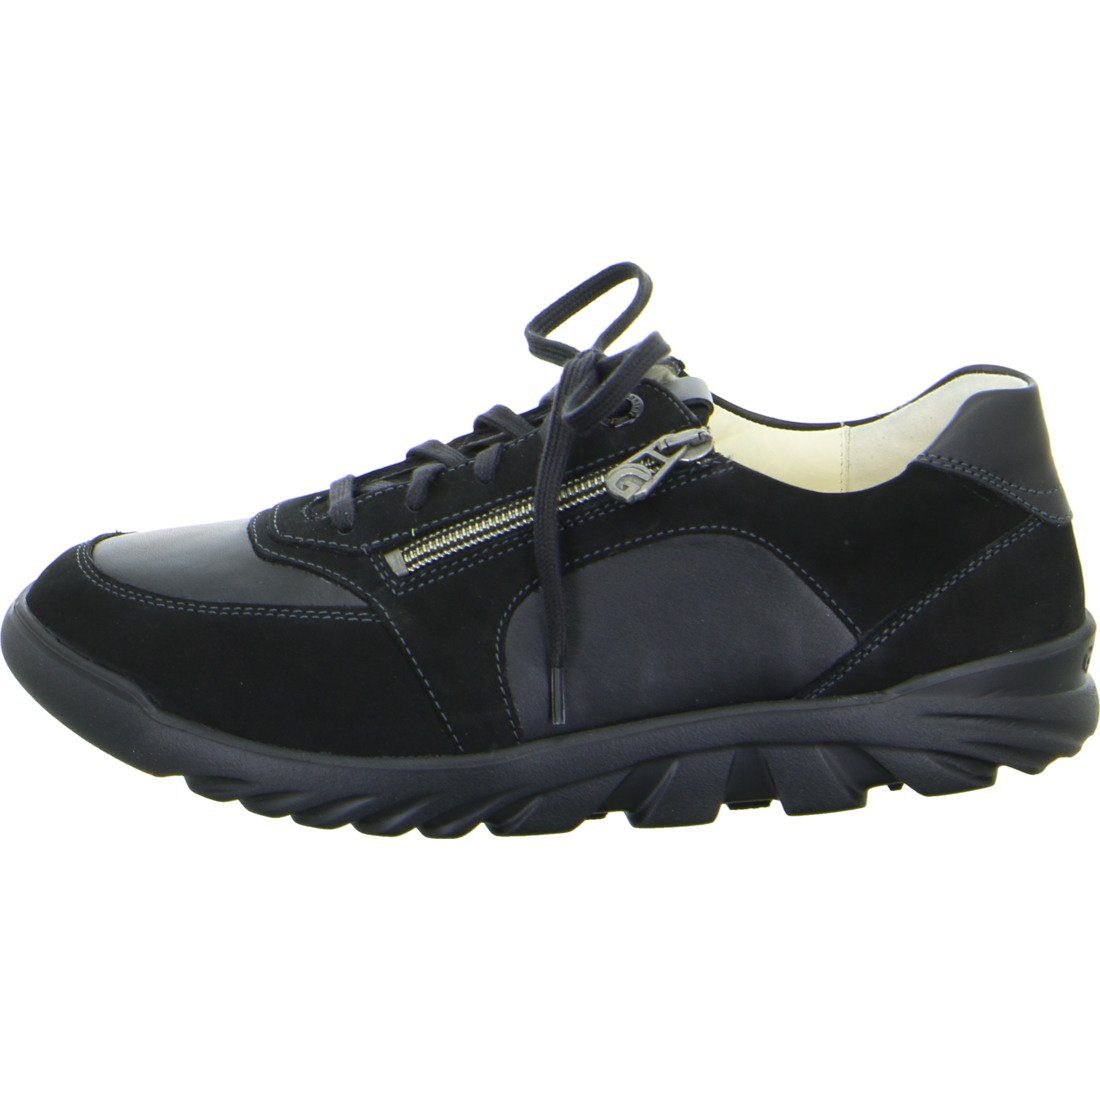 Haylie 050275 Ganter - Materialmix Sneaker Sneaker Schuhe, schwarz Ganter